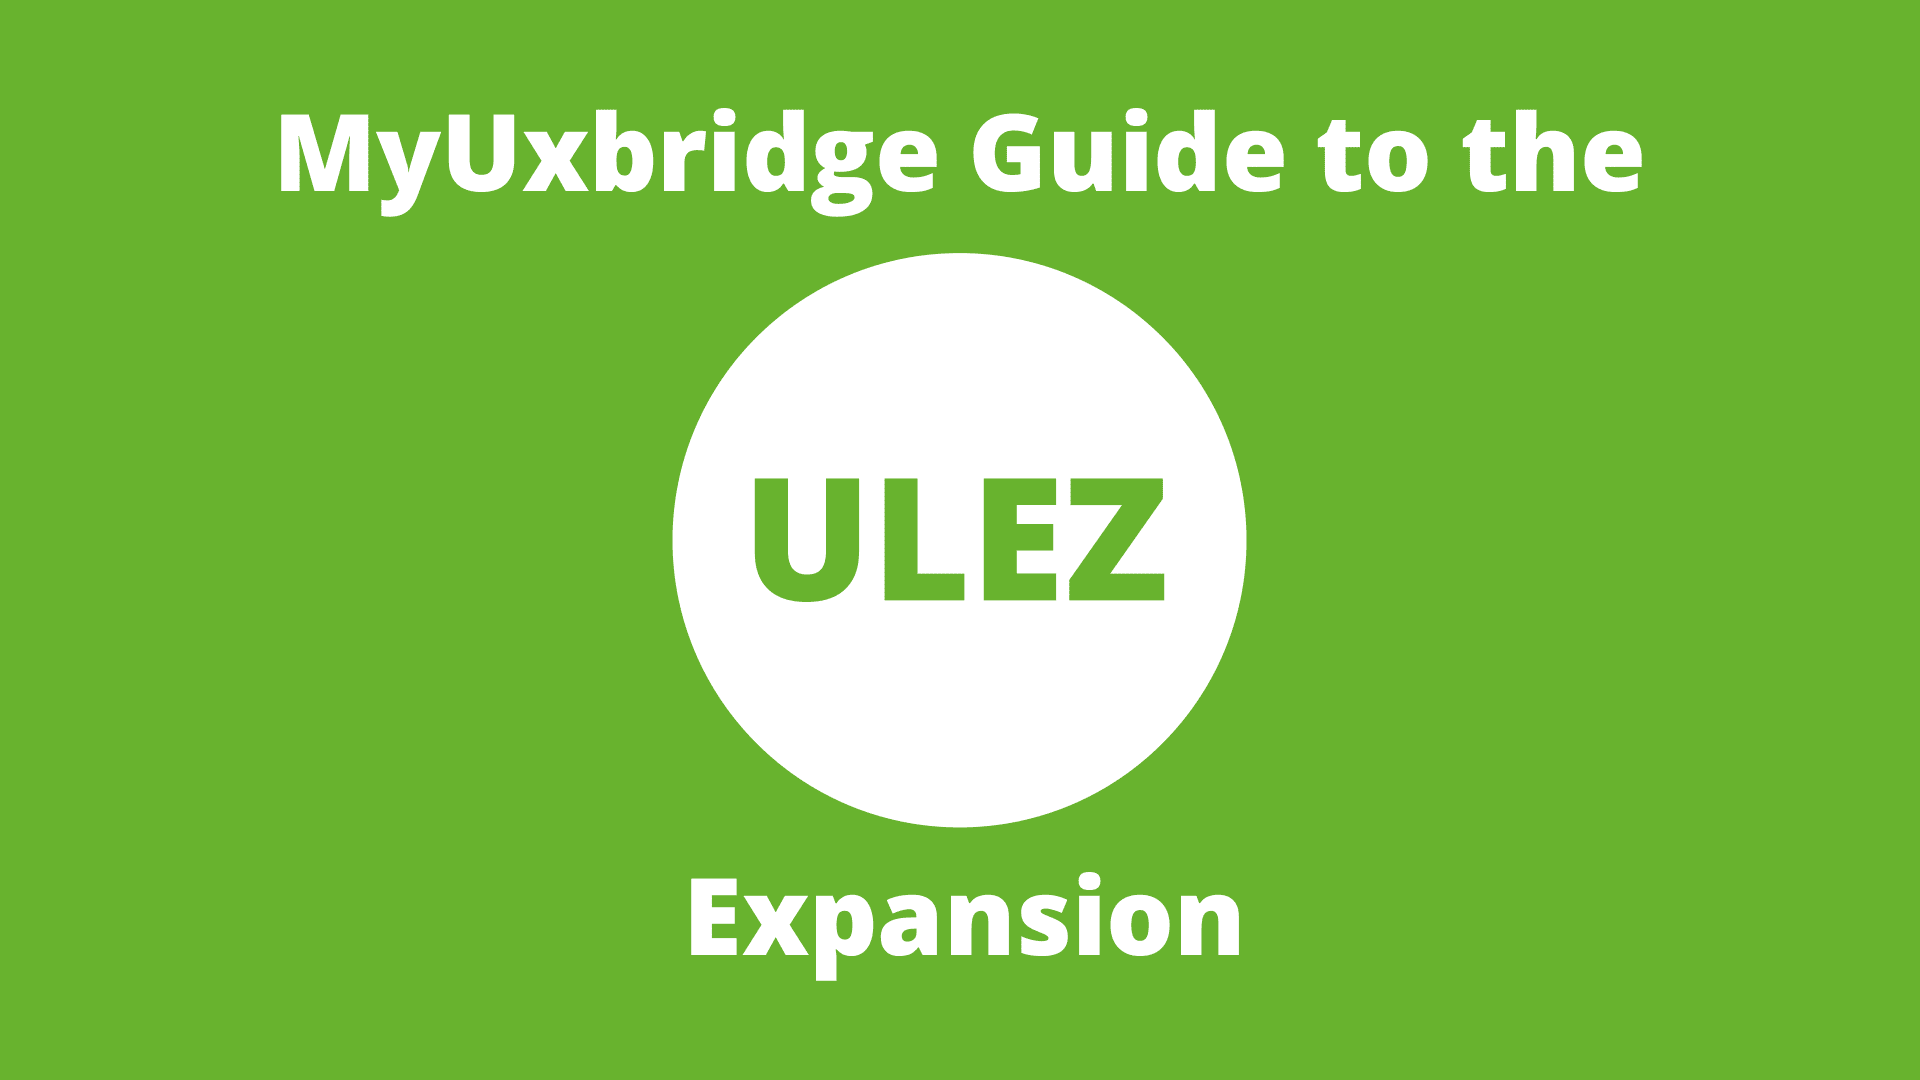 MyUxbridge Guide to the ULEZ expansion